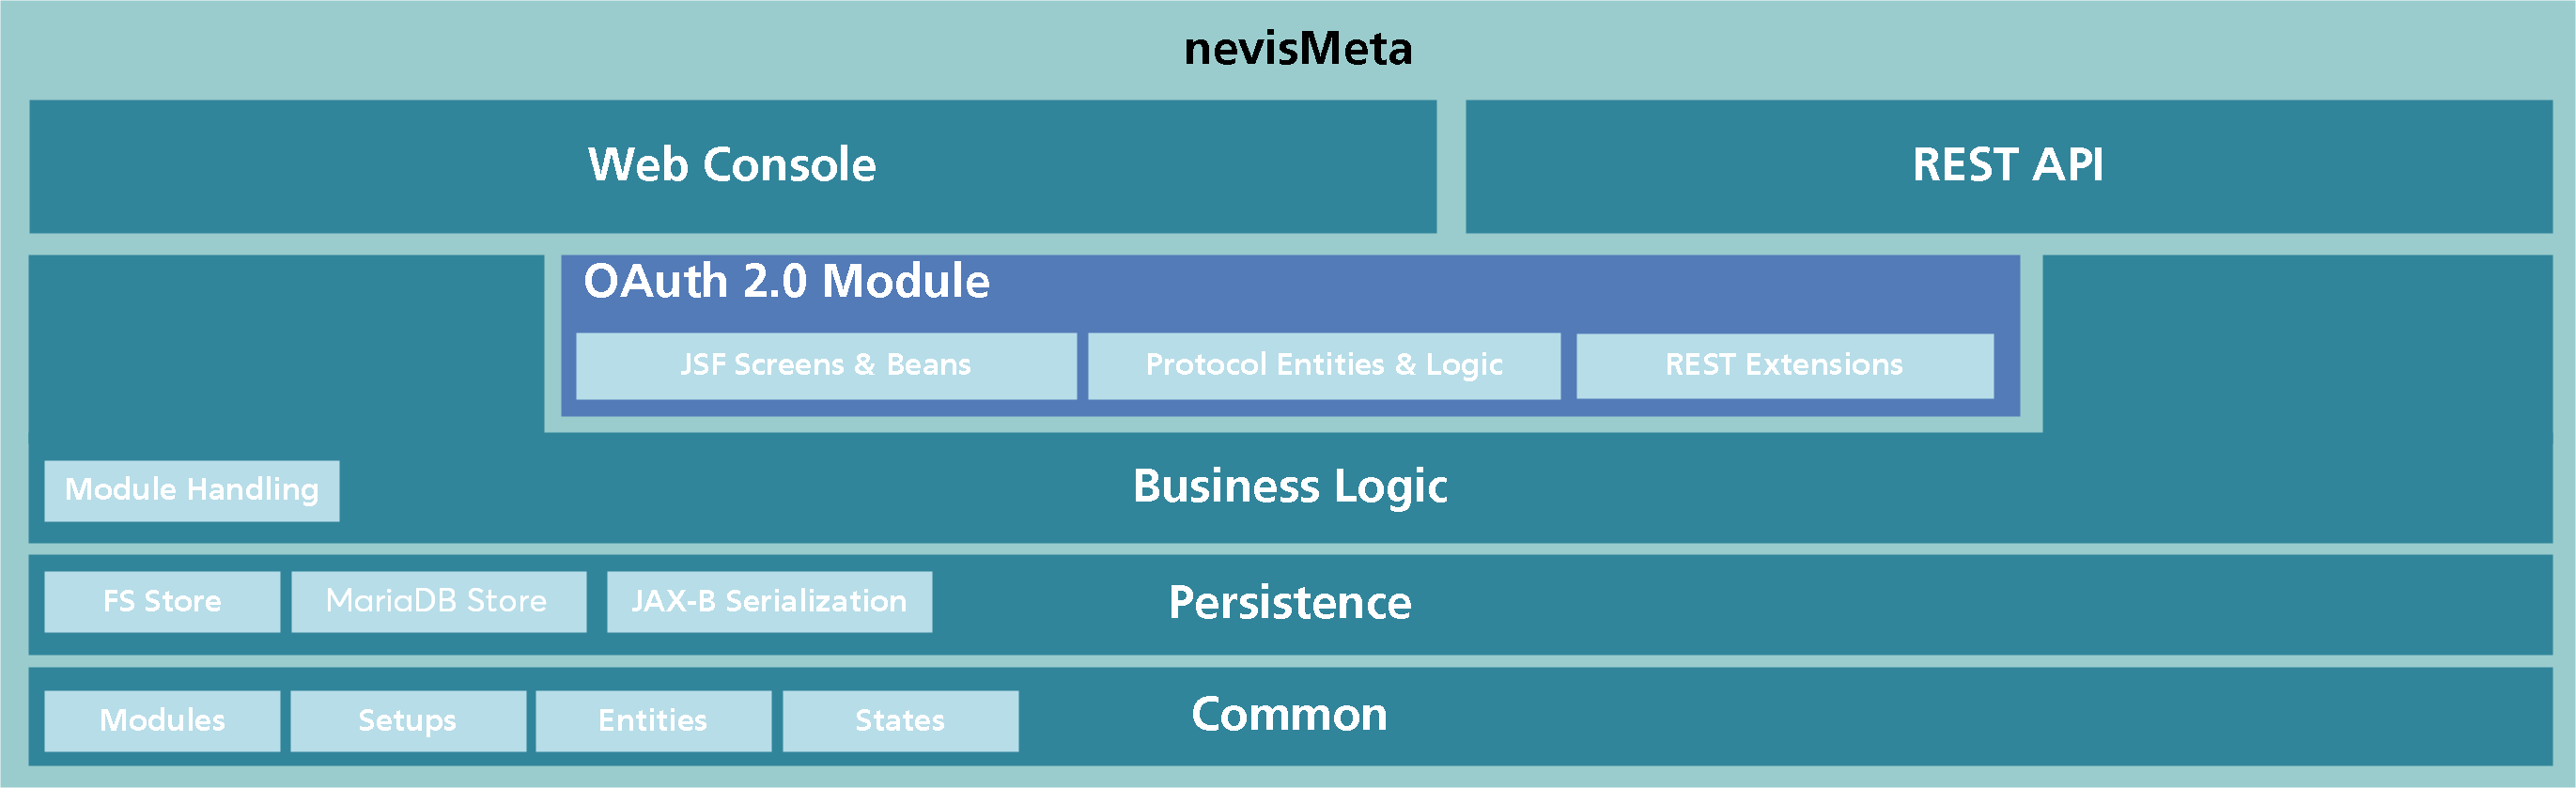 nevisMeta software architecture